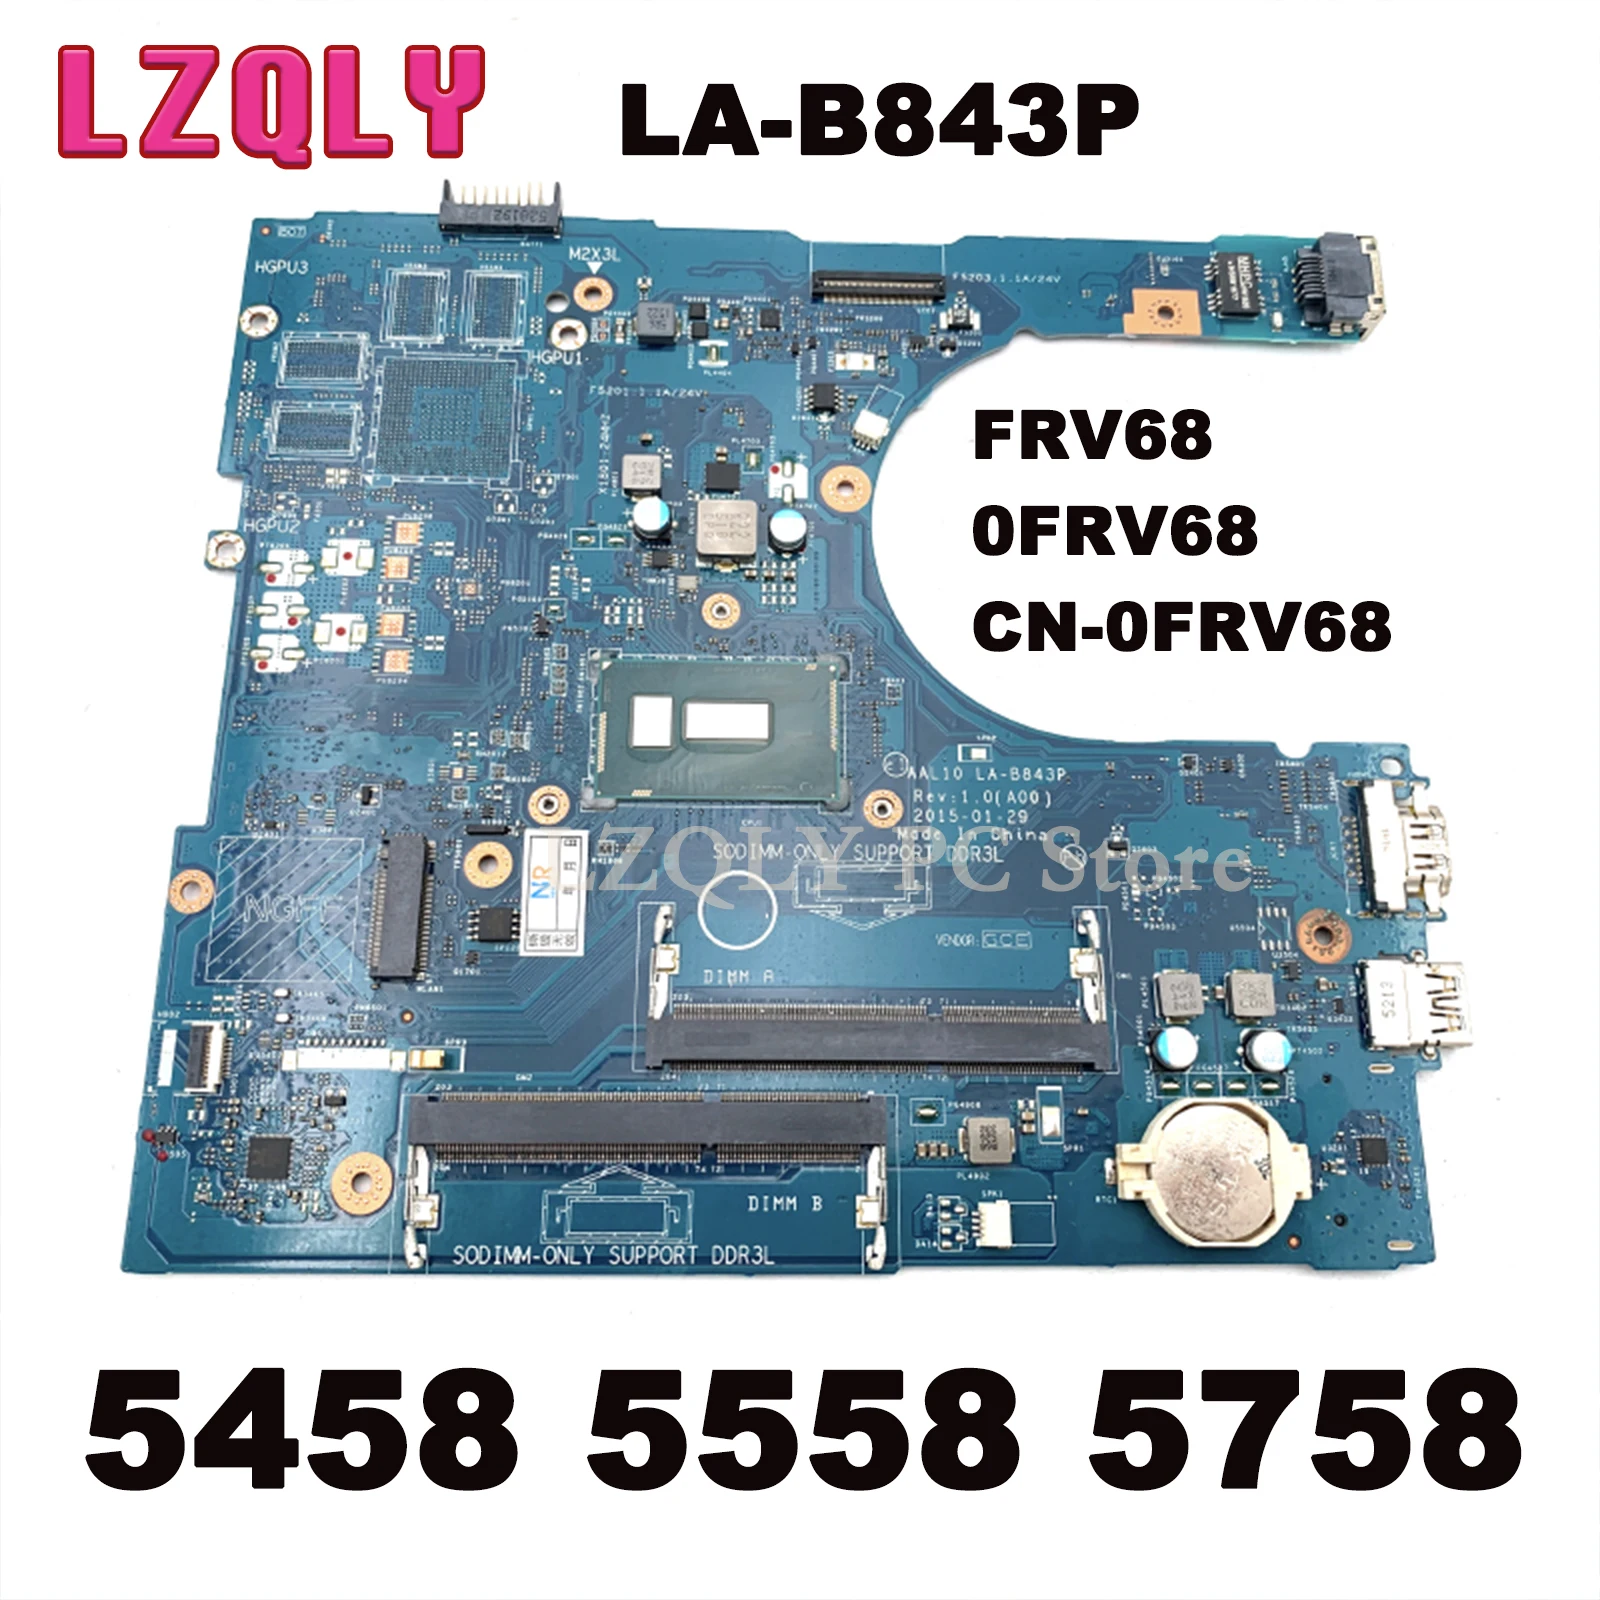 

Материнская плата LZQLY для ноутбука Dell Inspiron 5458 5558 5758 FRV68 0FRV68, стандартная материнская плата для ноутбука I5-5200U, ЦП 2,2 ГГц DDR3L